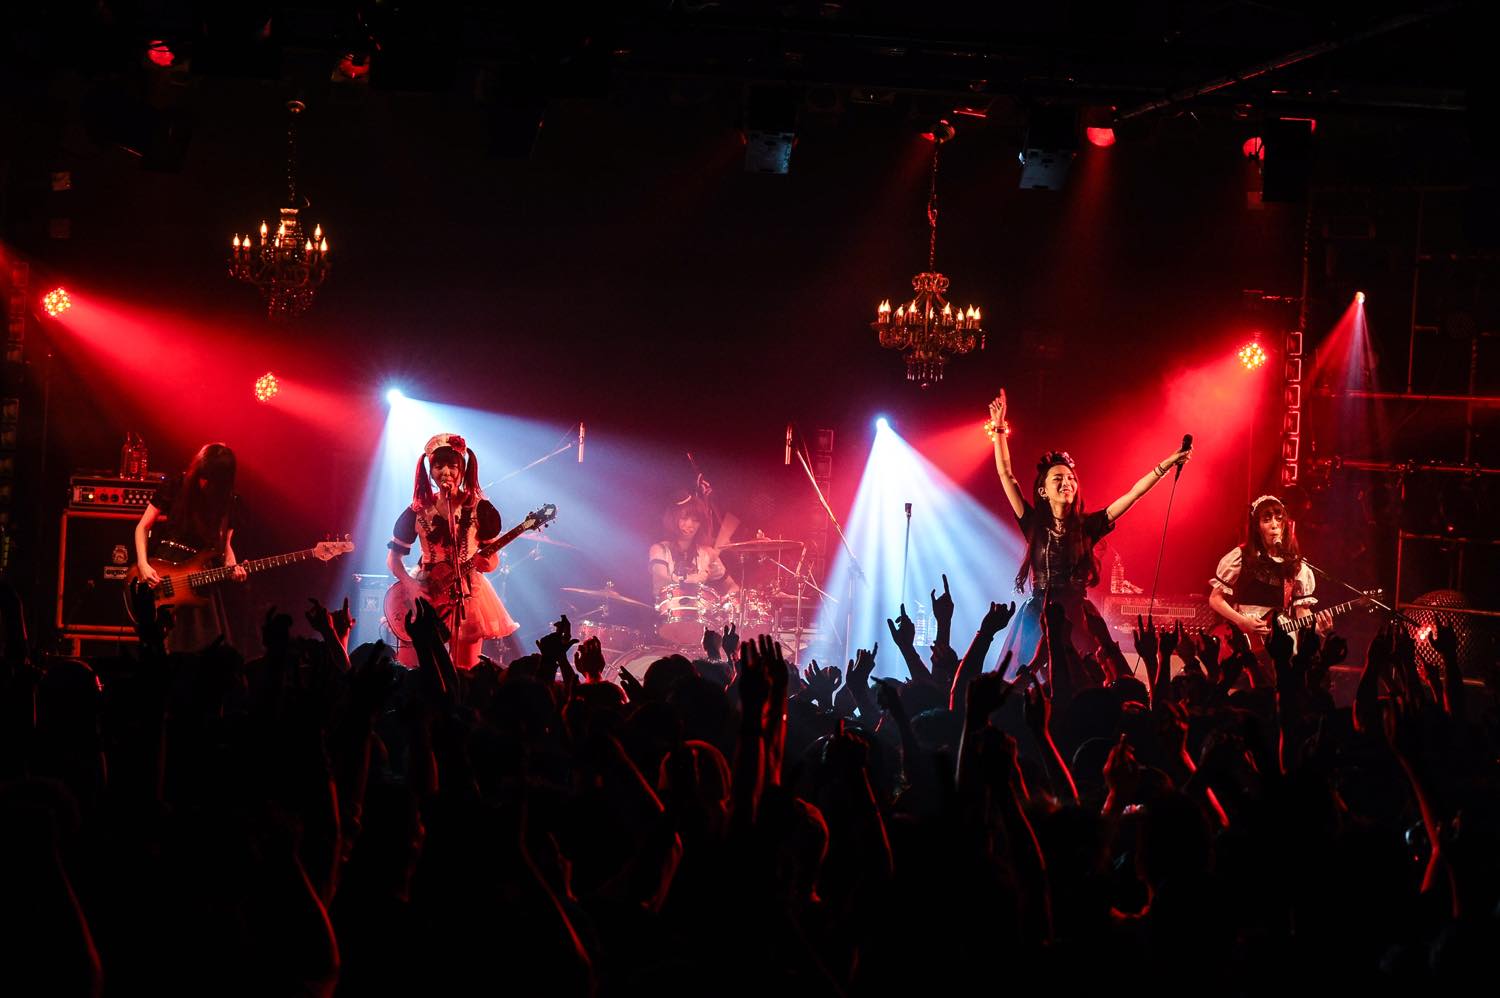 BAND-MAID Serve Up Ebisu LIQUIDROOM! Announce 2nd Japan Tour and World Tour for Autumn/Winter 2017!